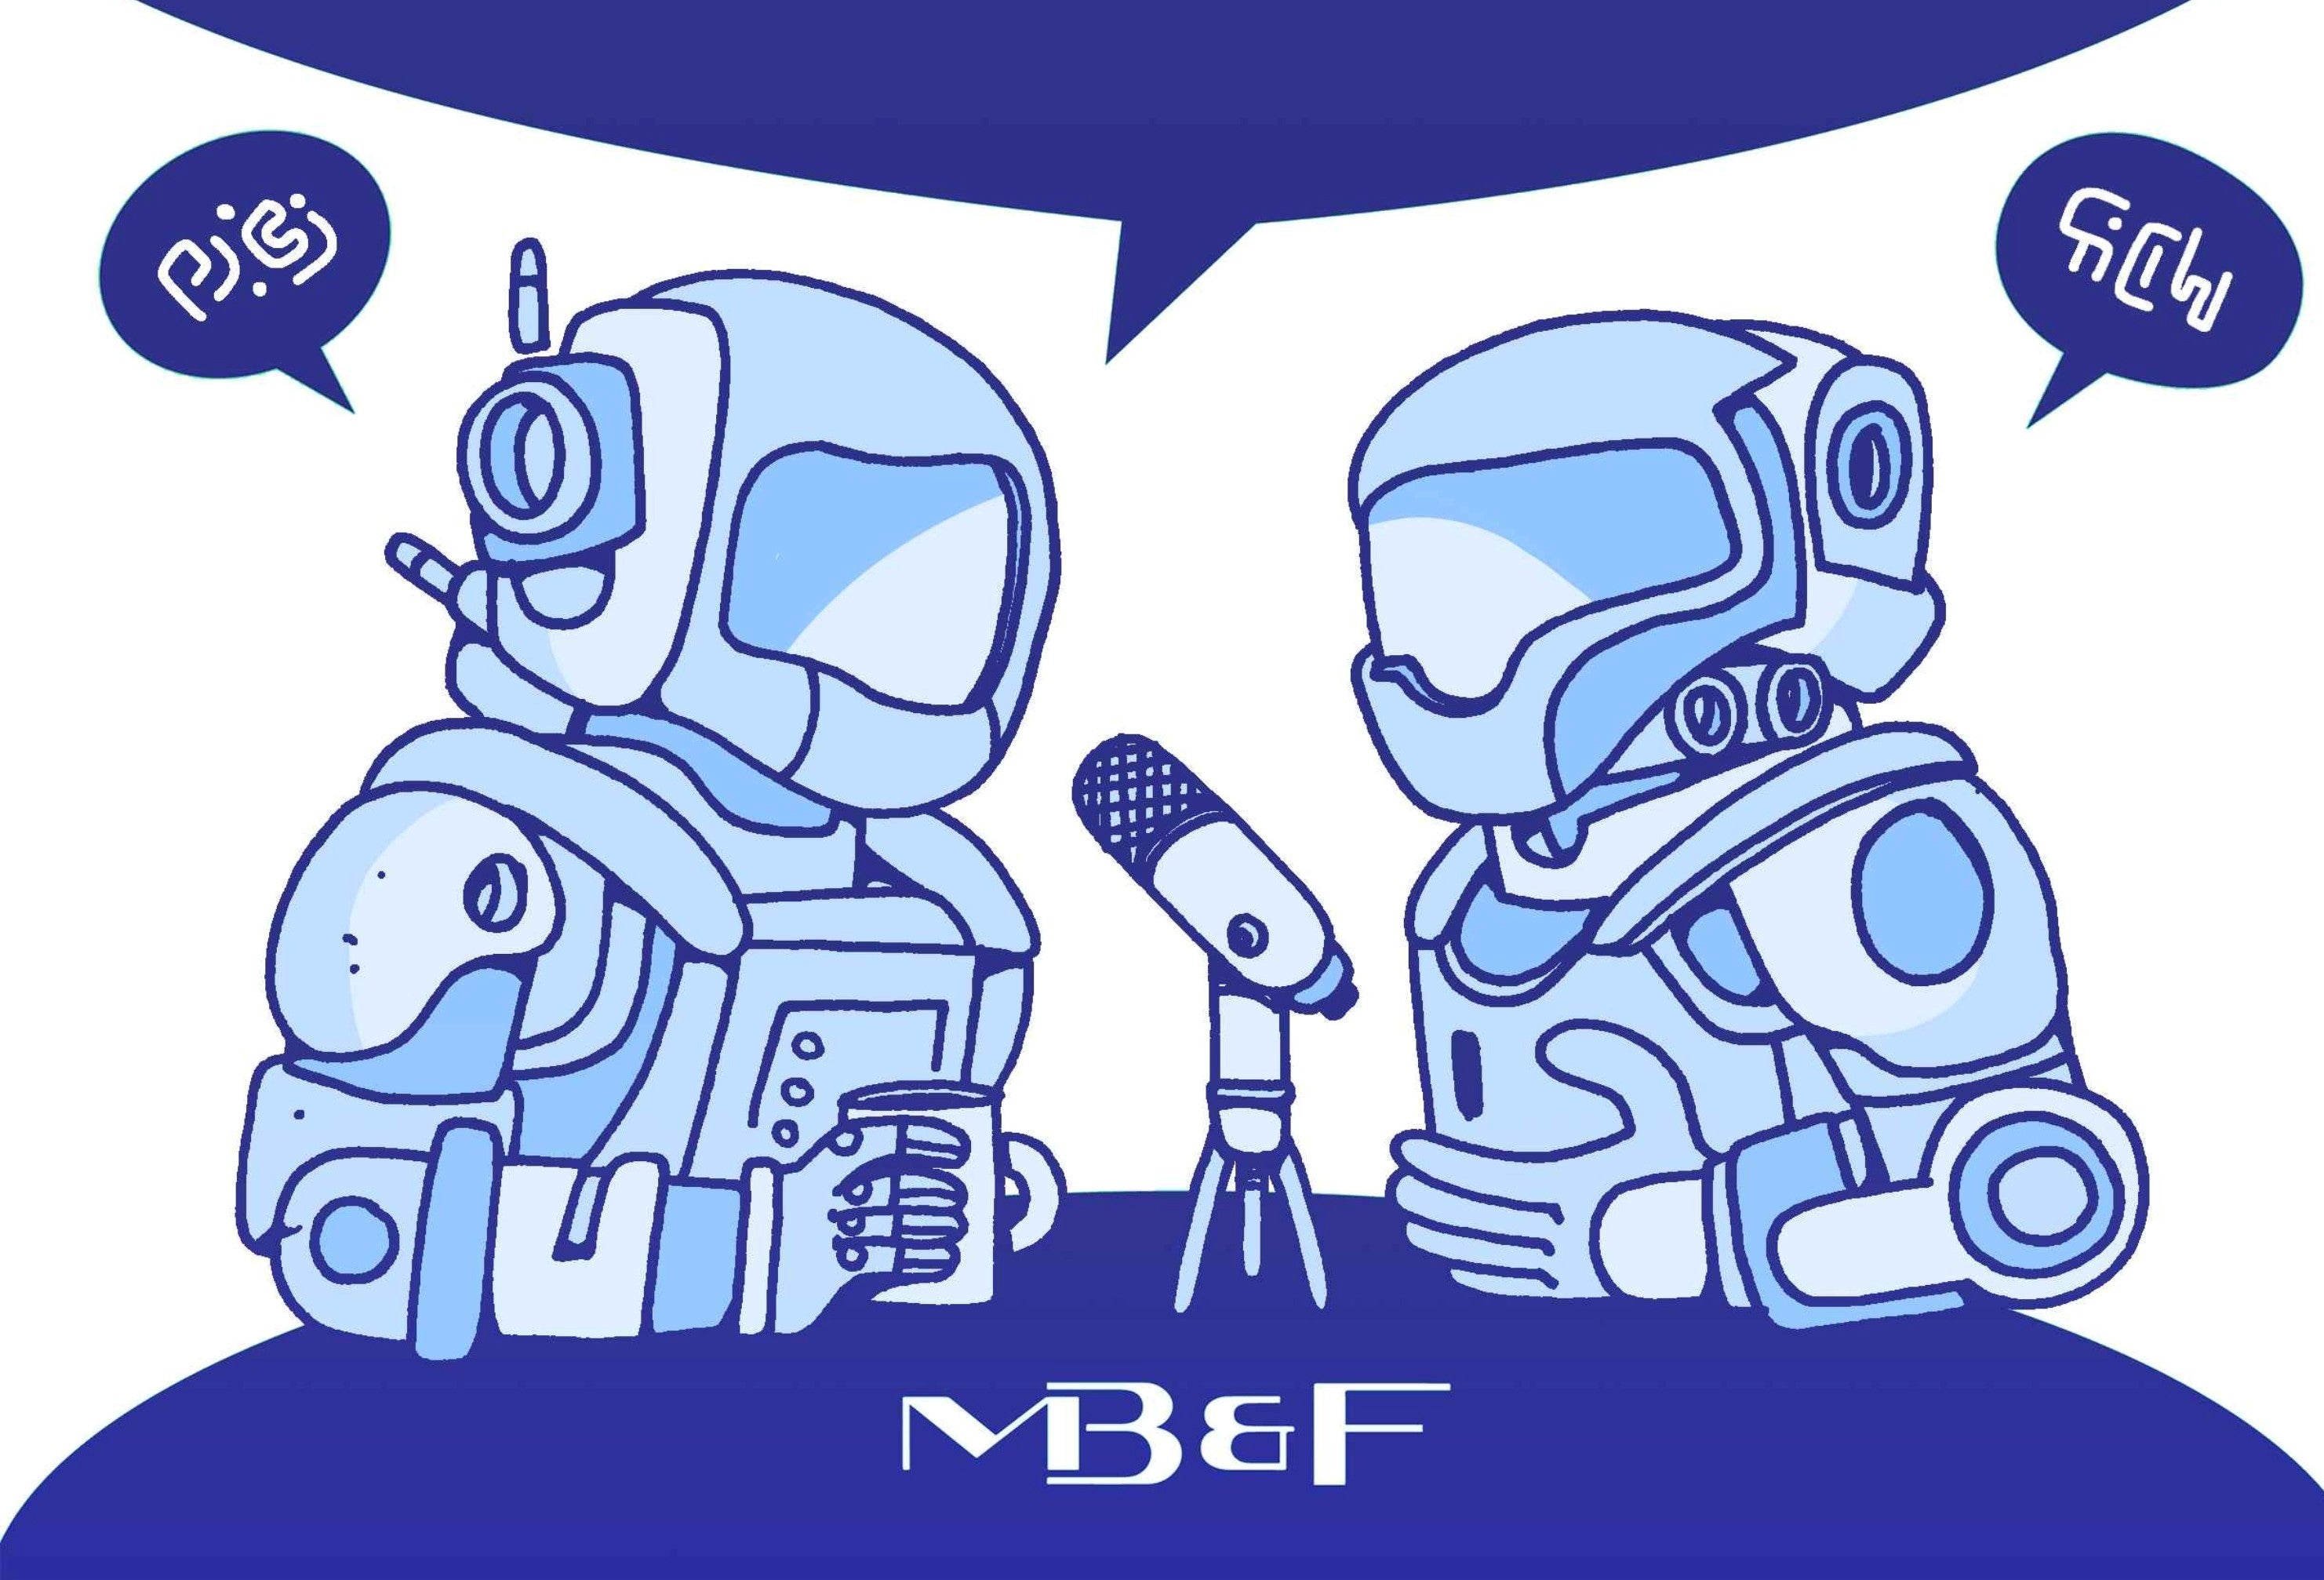 MB&F's podcast: Max Büsser & friends on microphone